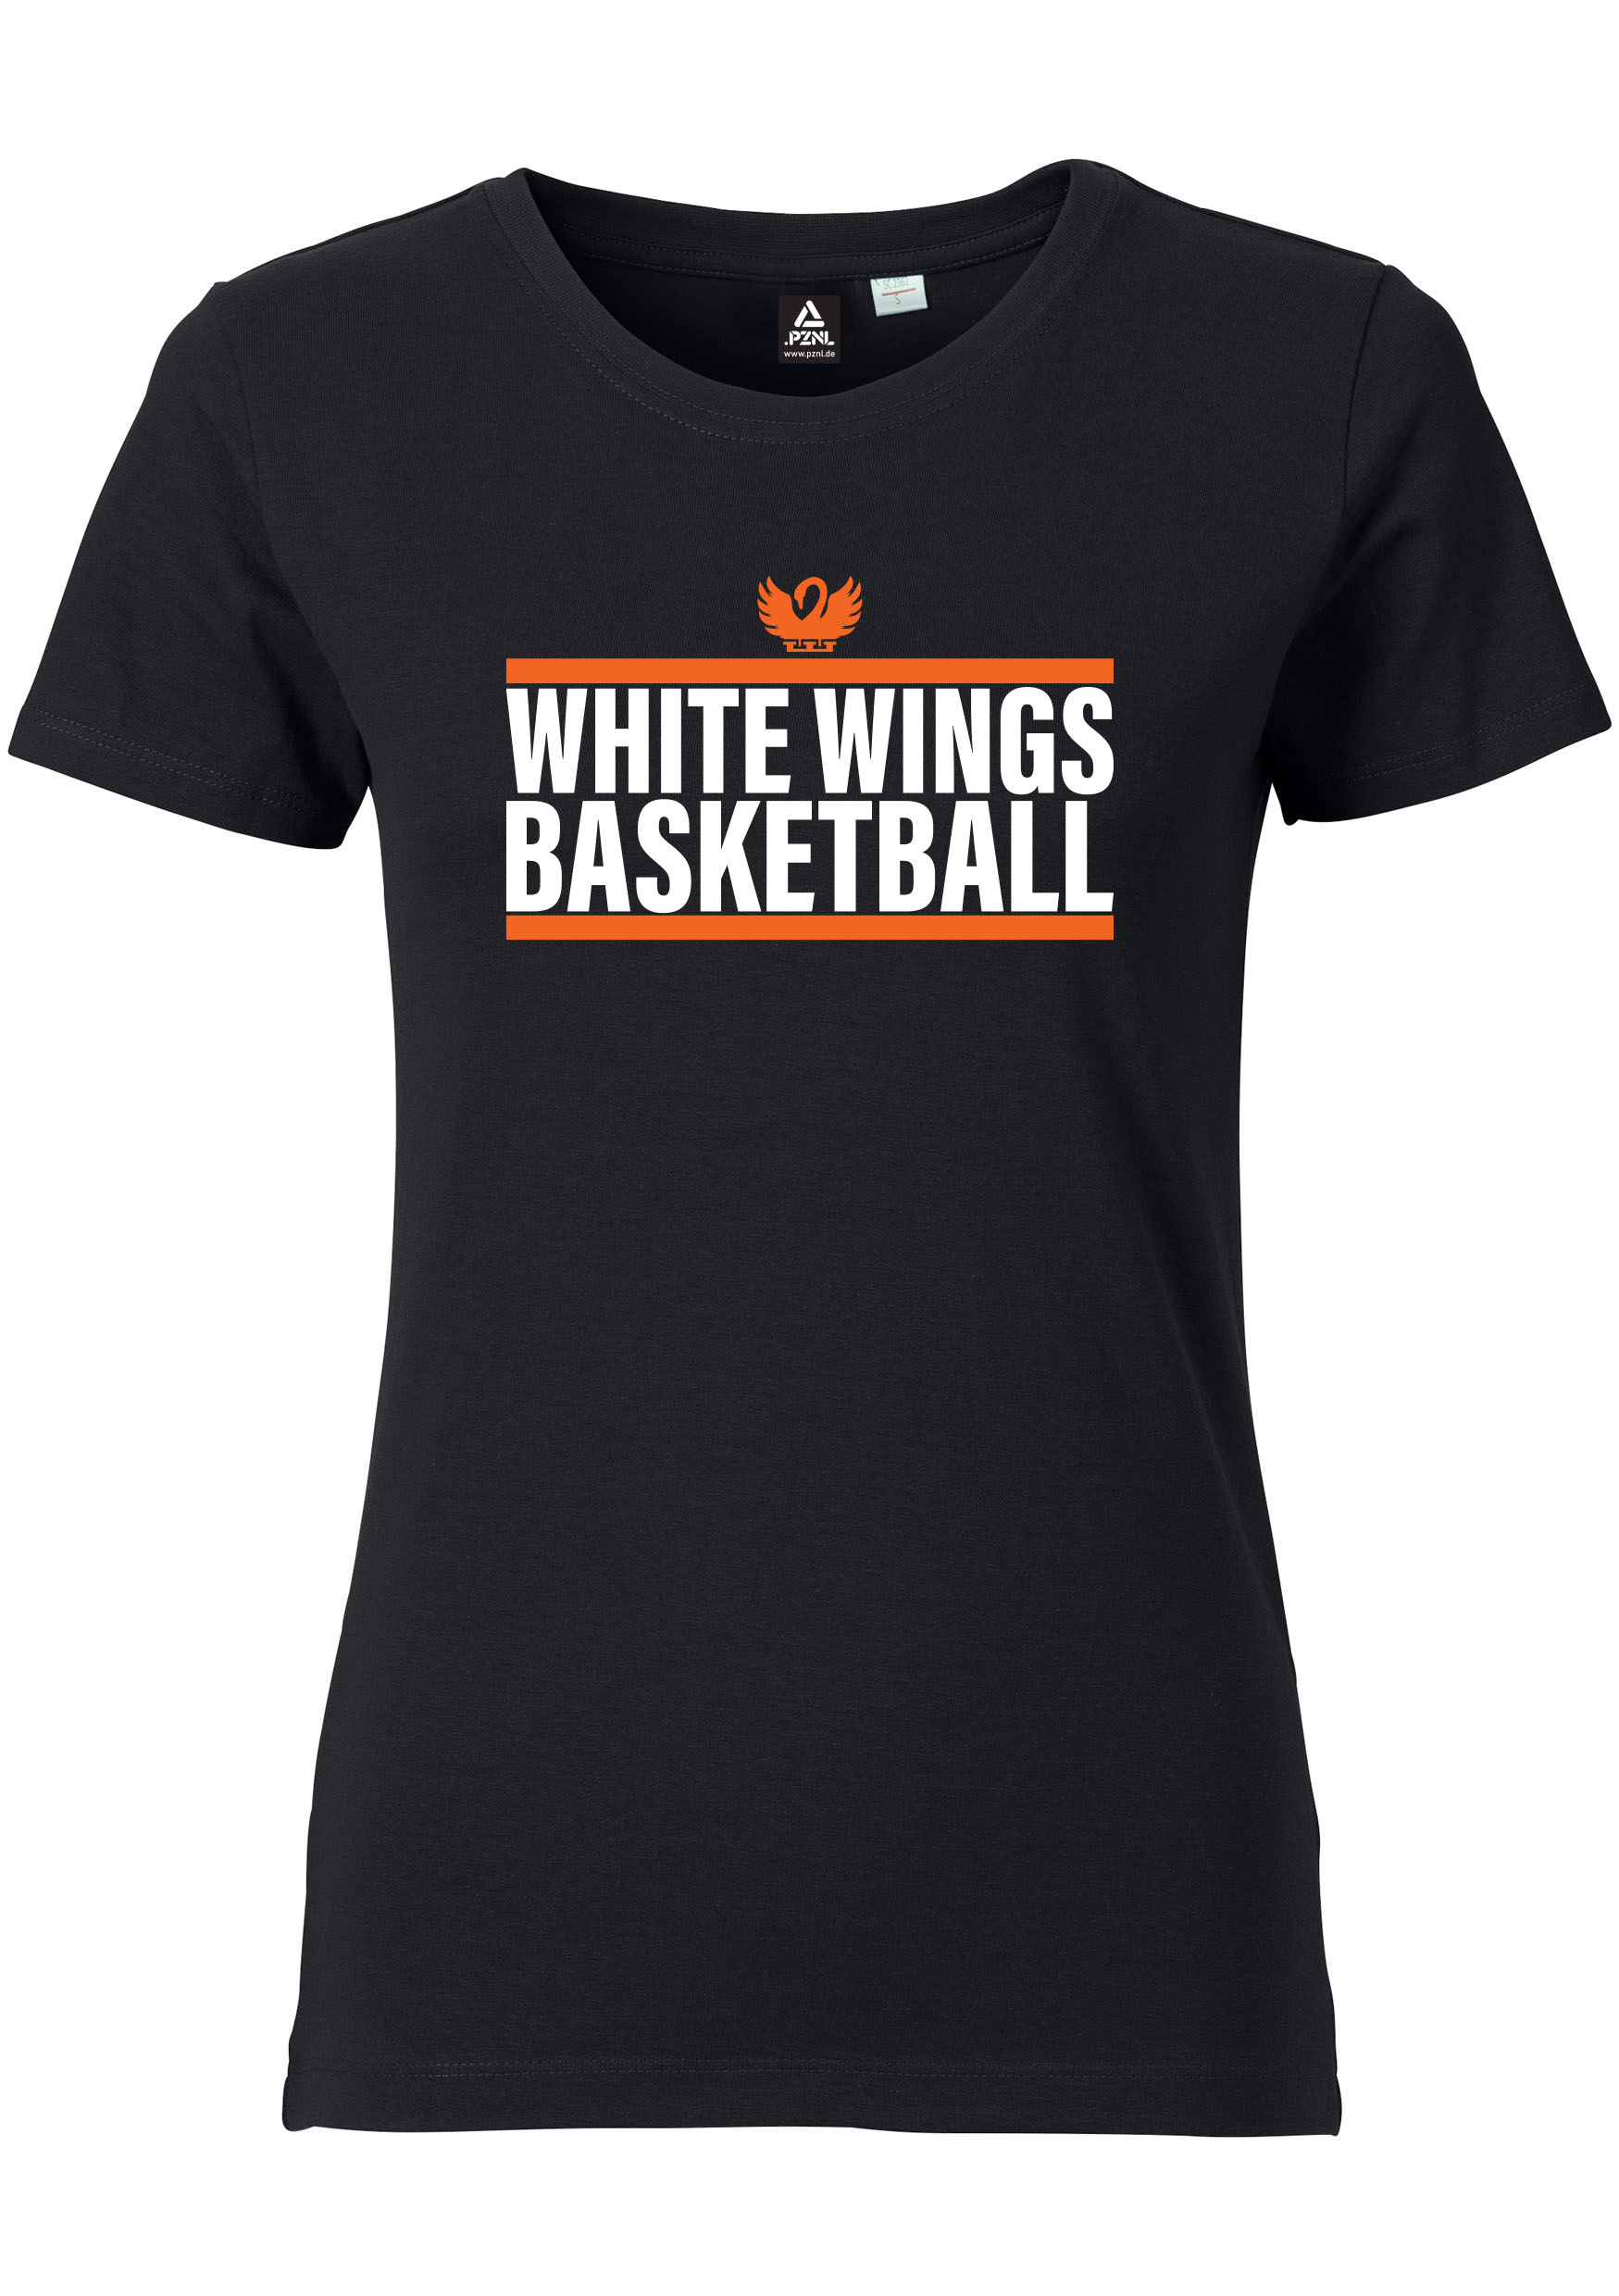 WhiteWings Basketball T-Shirt Damen